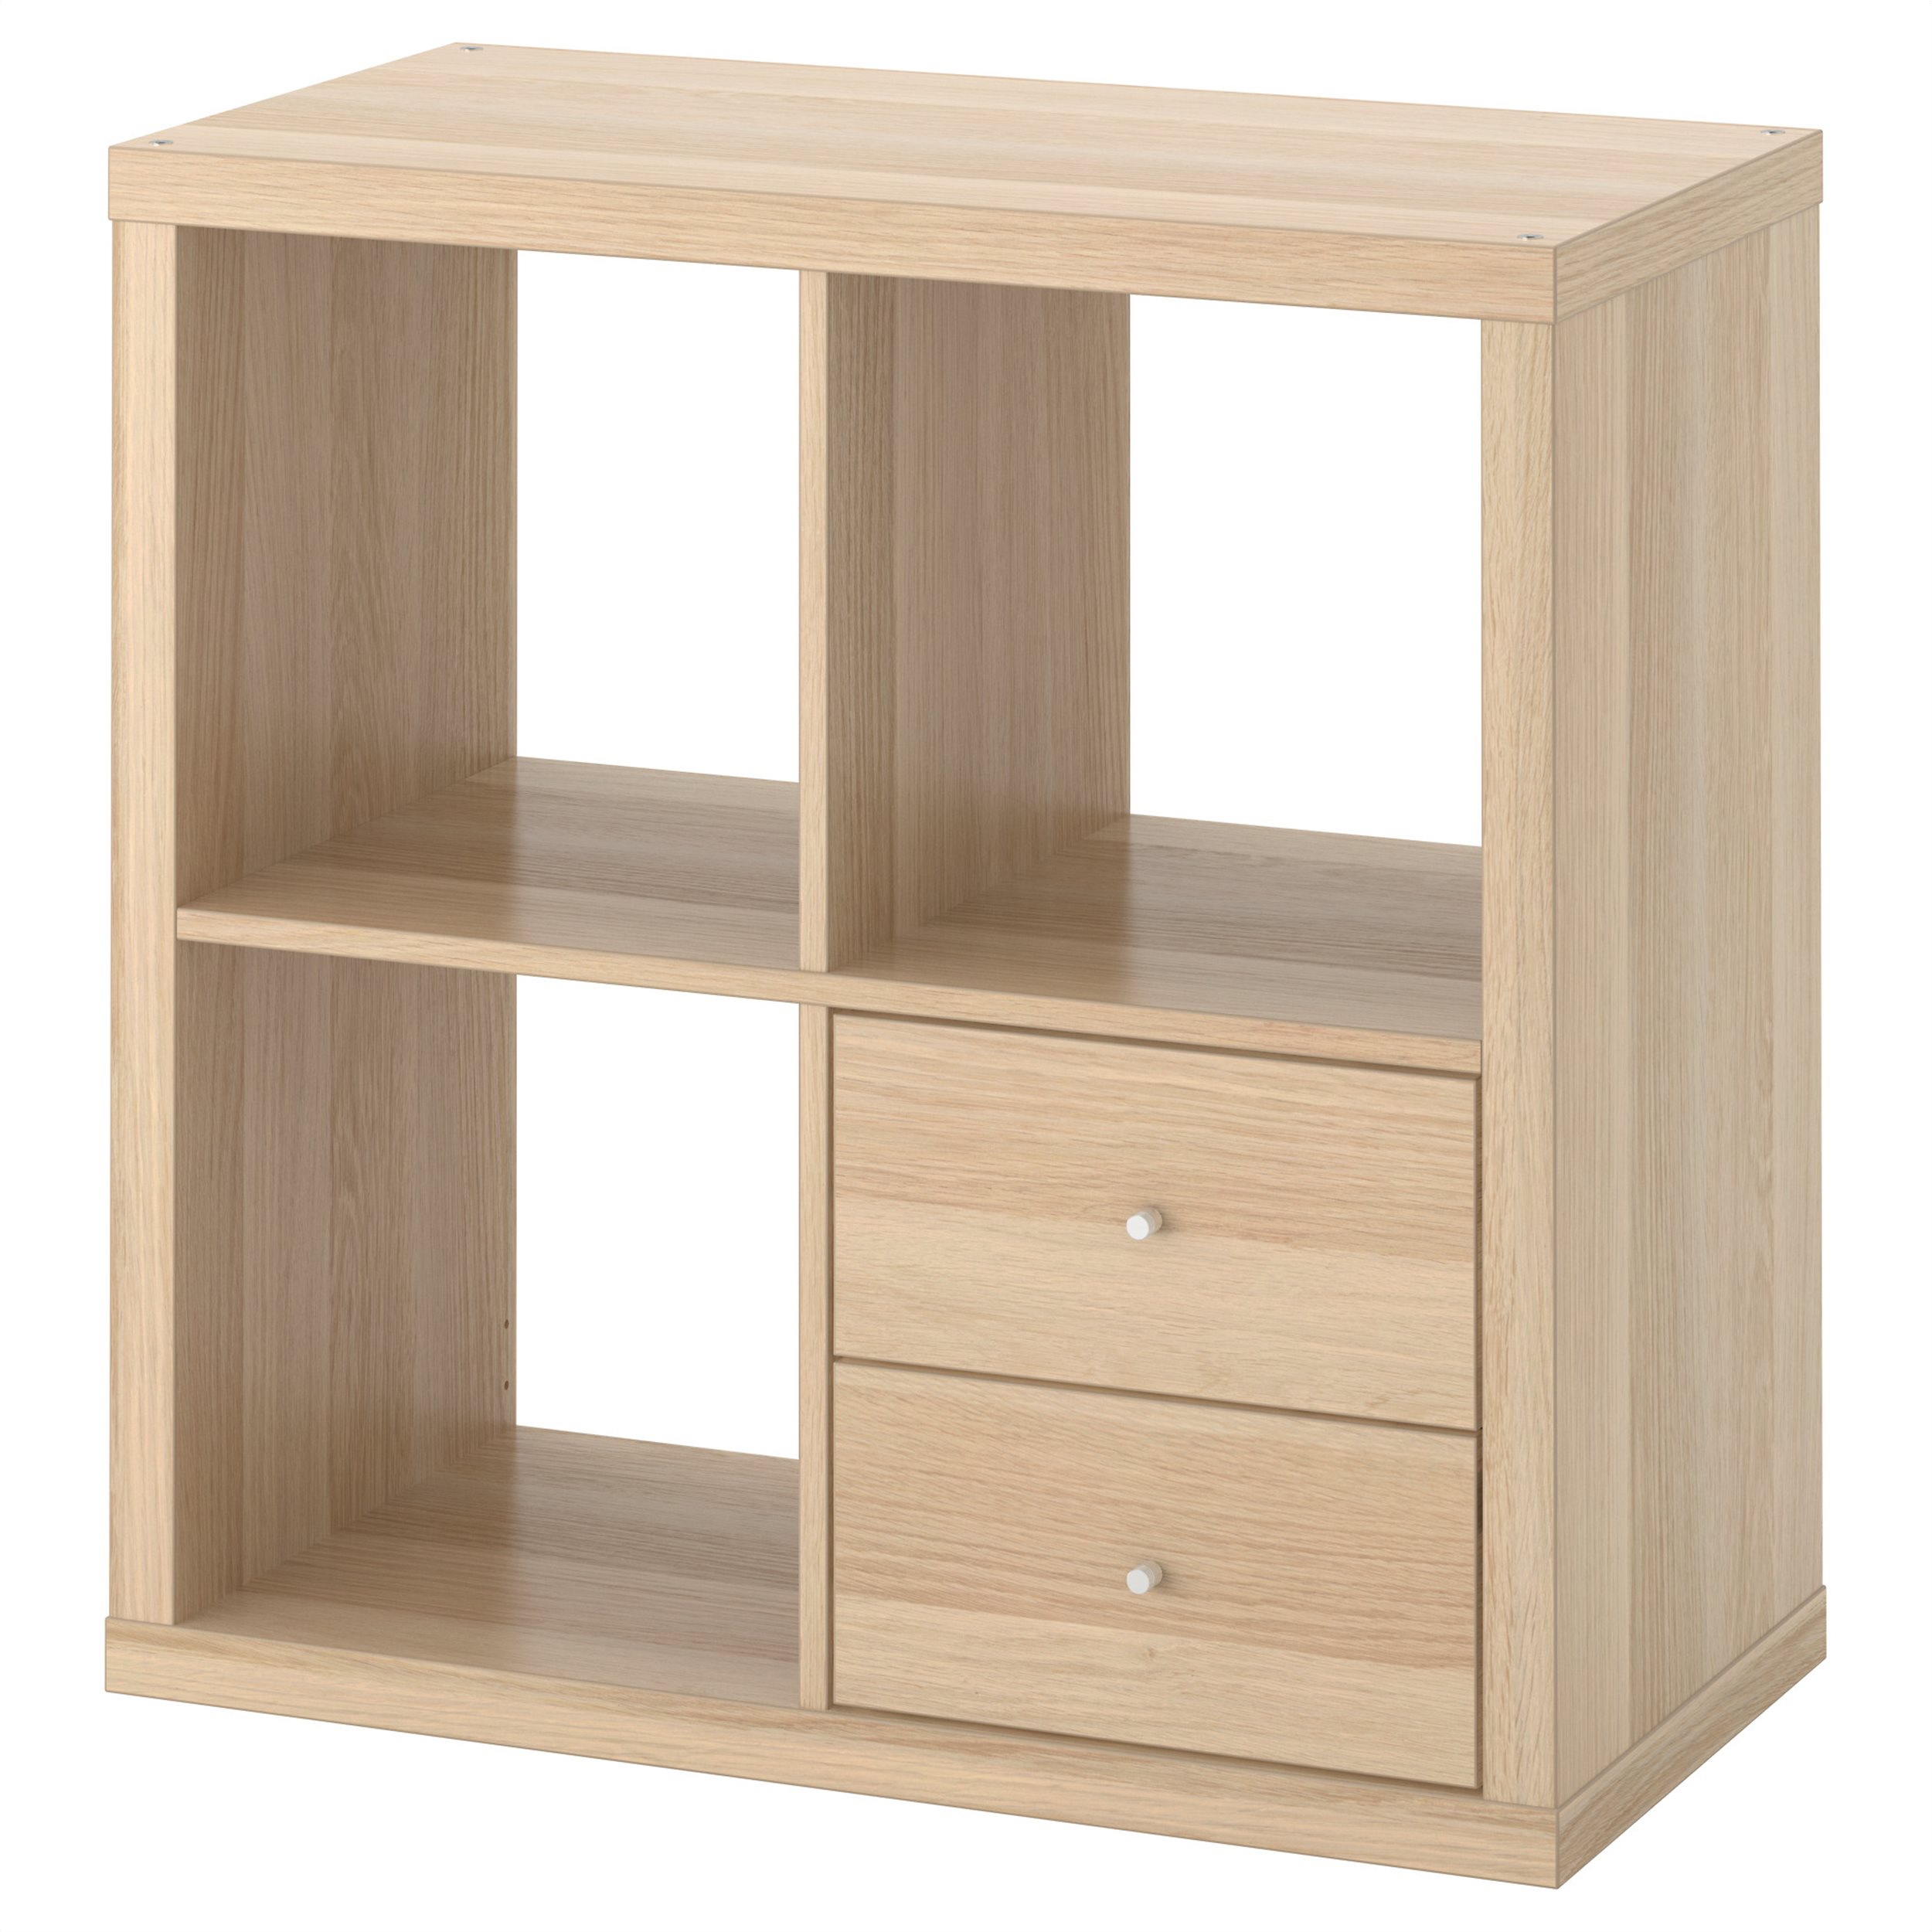 KALLAX shelving unit with drawers, White IKEA Cyprus